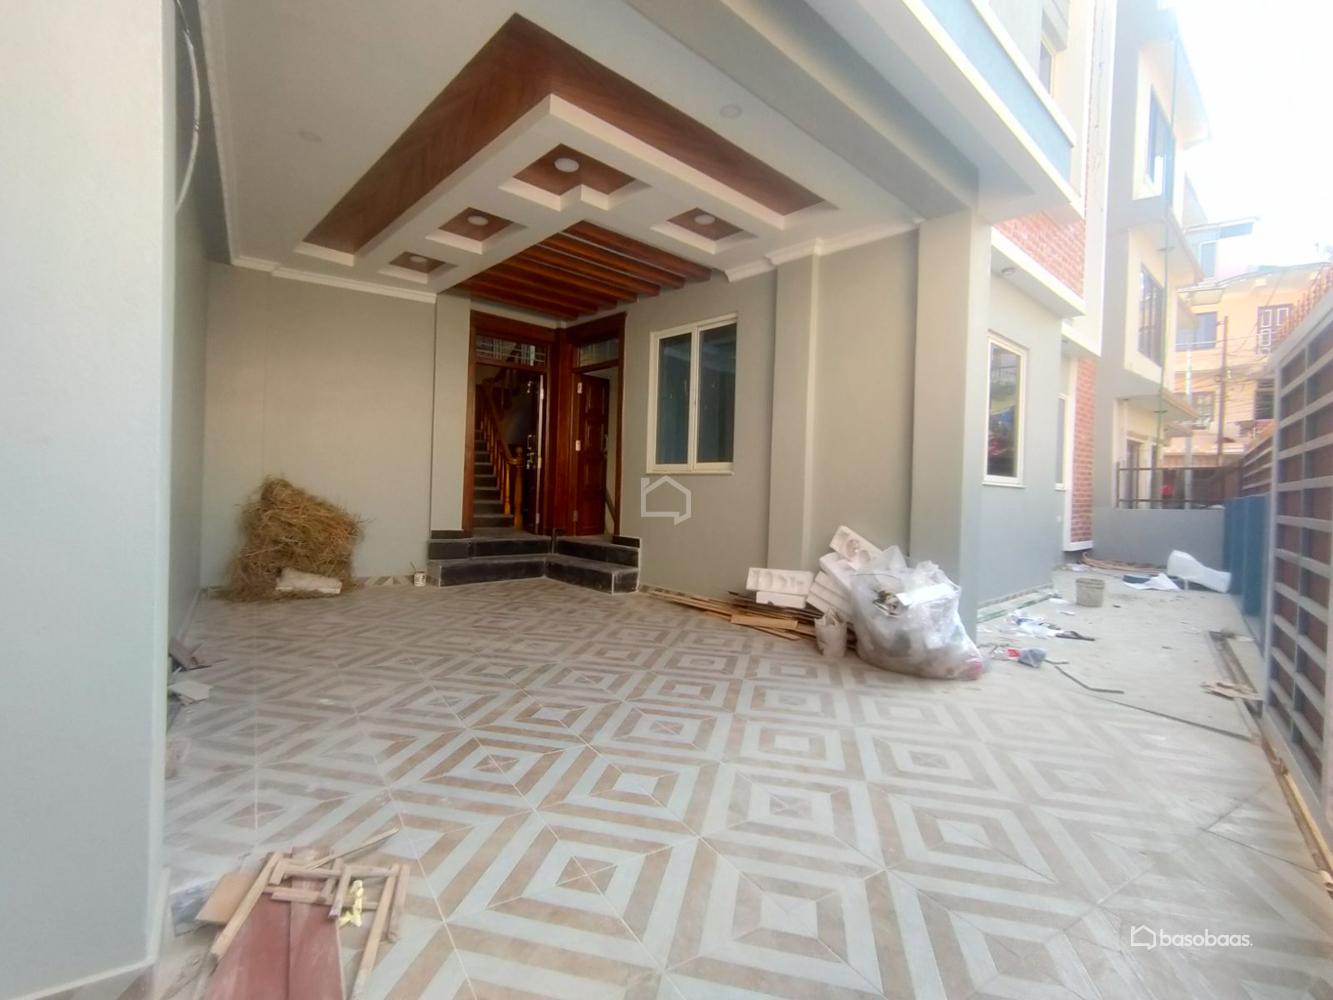 Residental : House for Sale in Nagarjun, Kathmandu Image 9